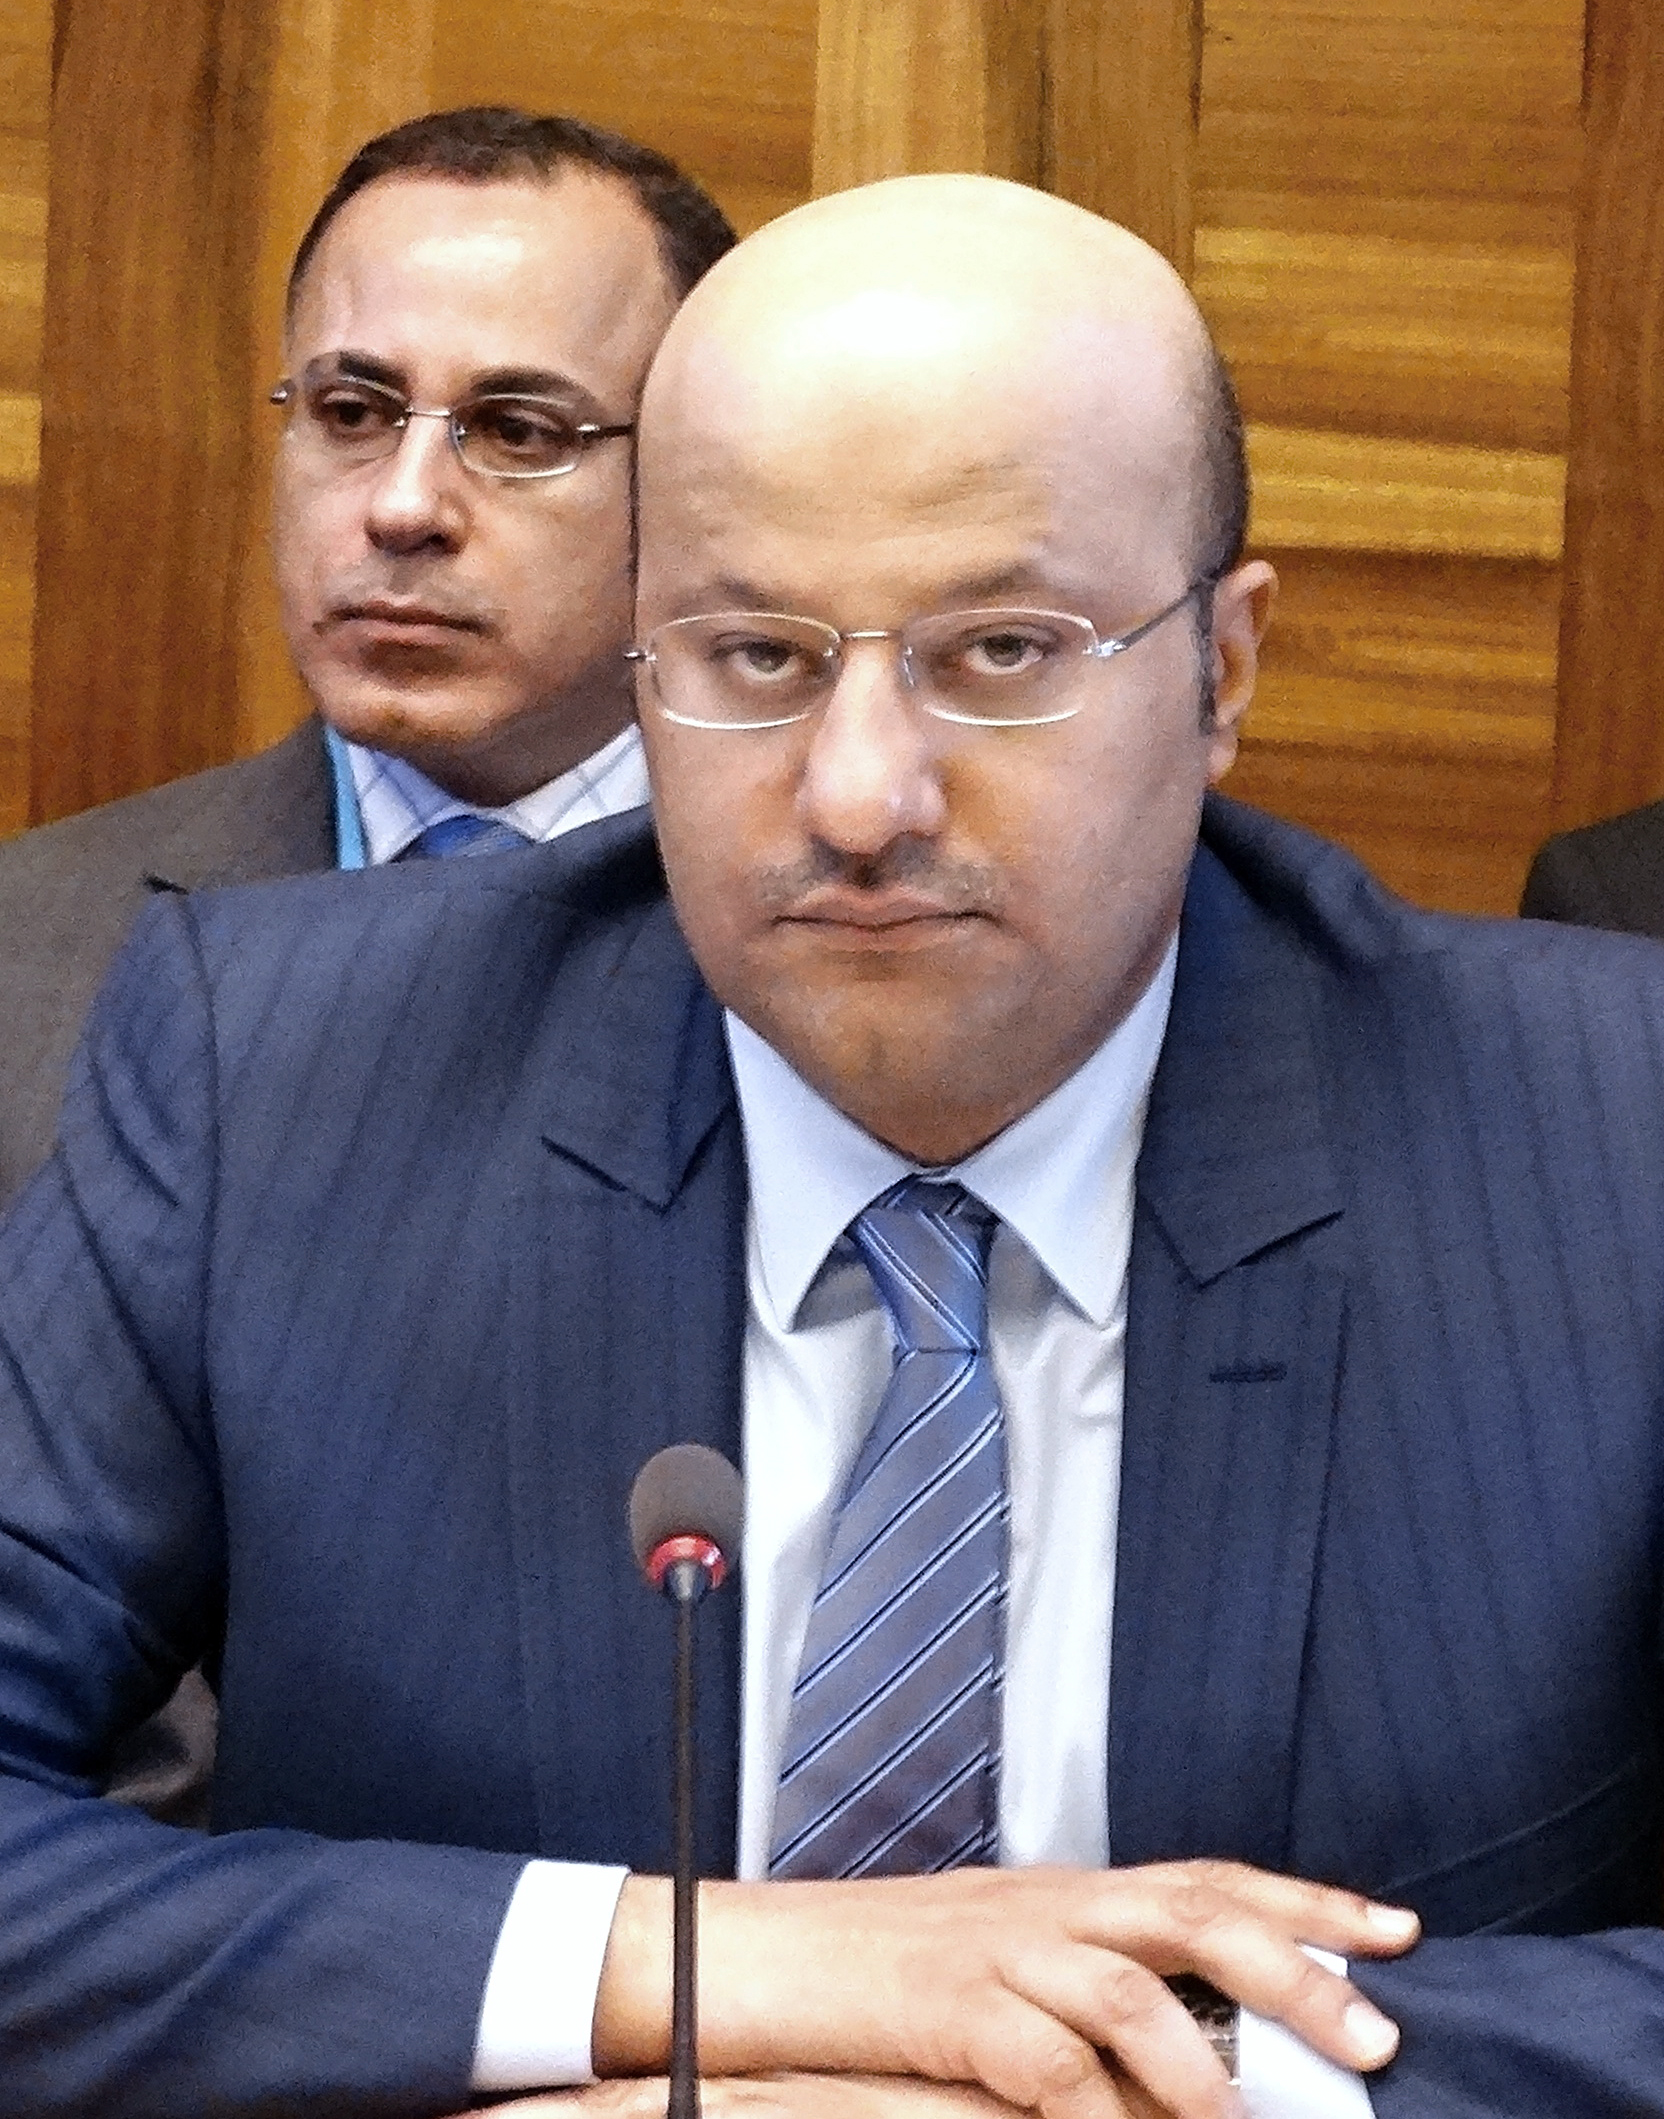 Kuwait's Minister of Health Dr. Ali Al-Obaidi